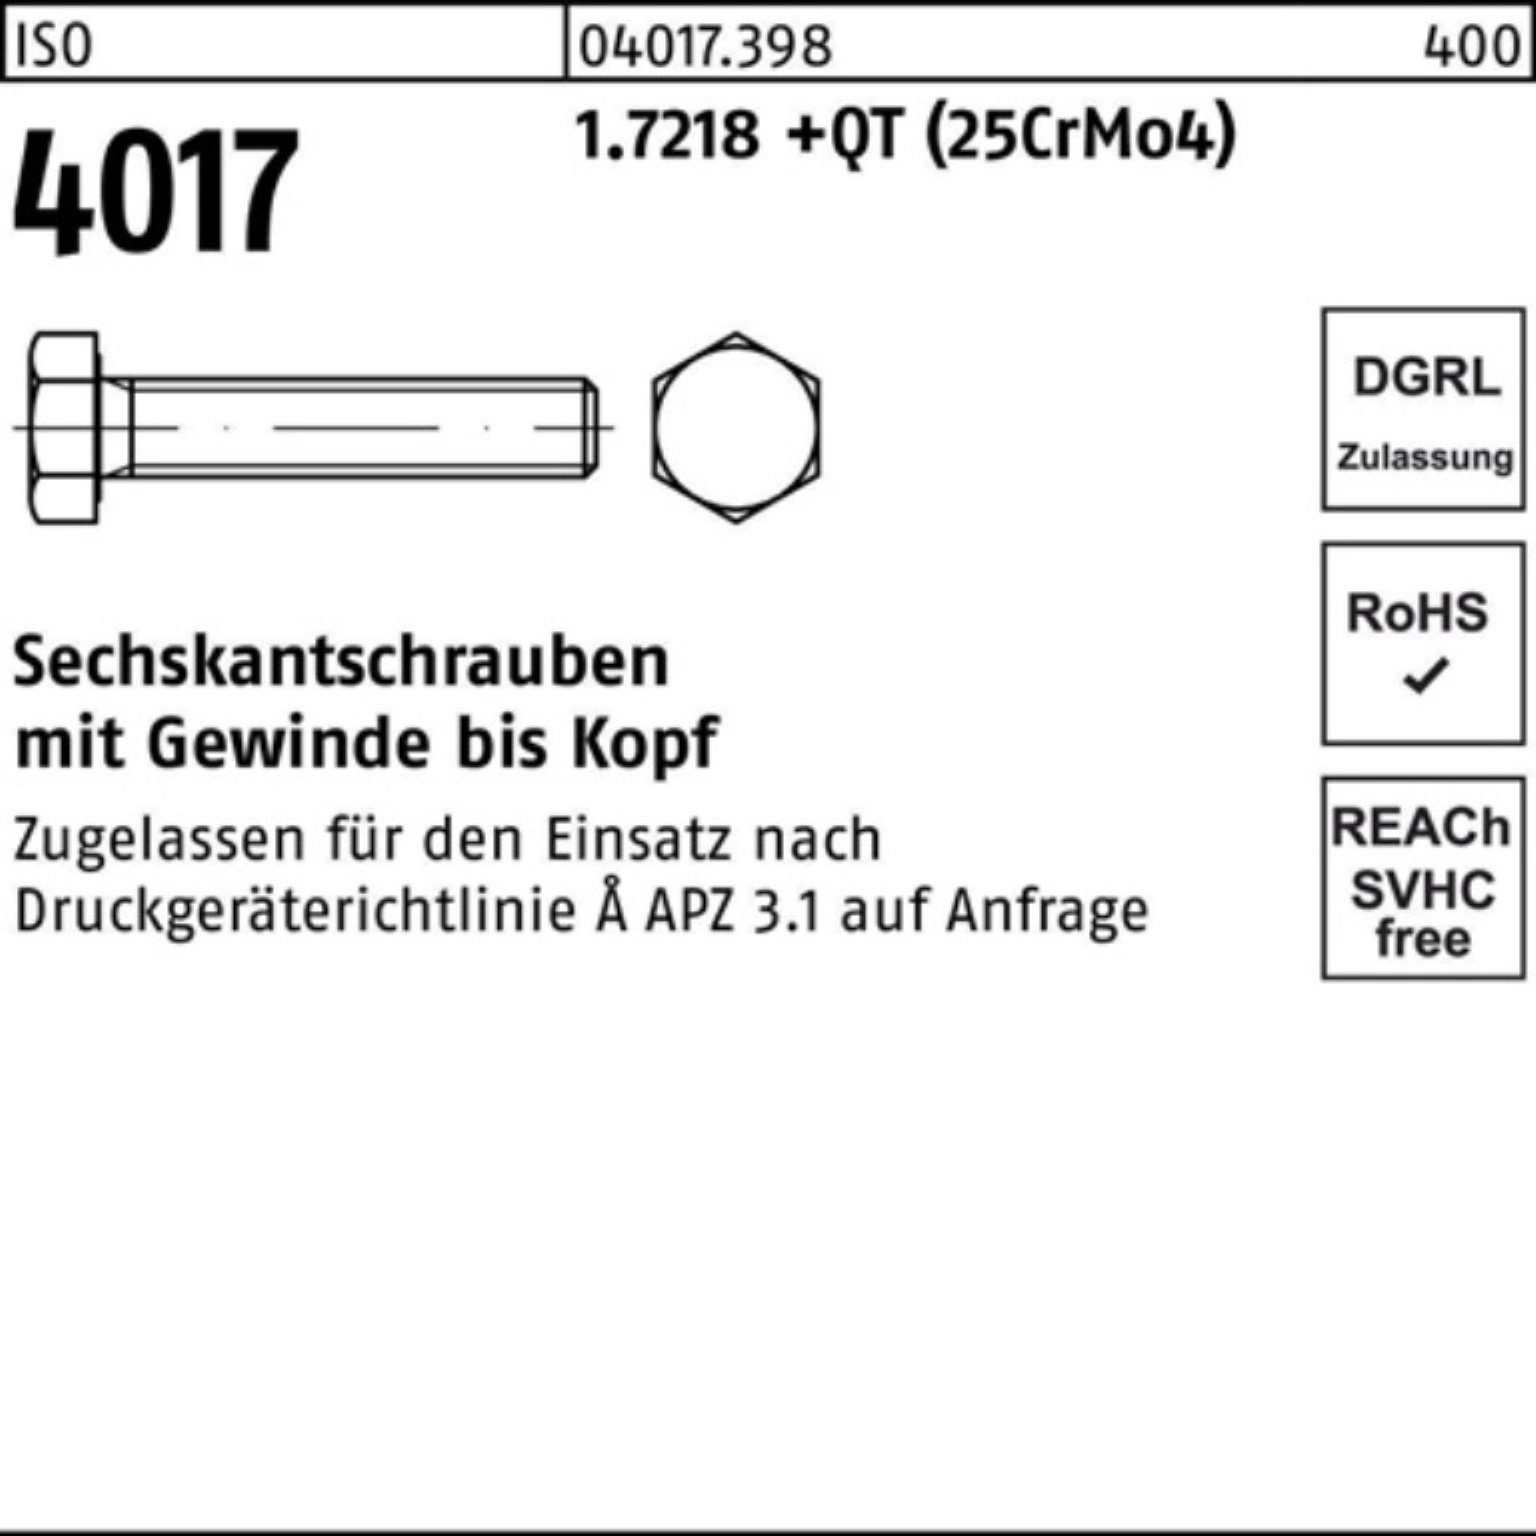 Pack 100er ISO +QT Sechskantschraube (25CrMo4) M12x 80 4017 1.7218 Sechskantschraube VG Bufab